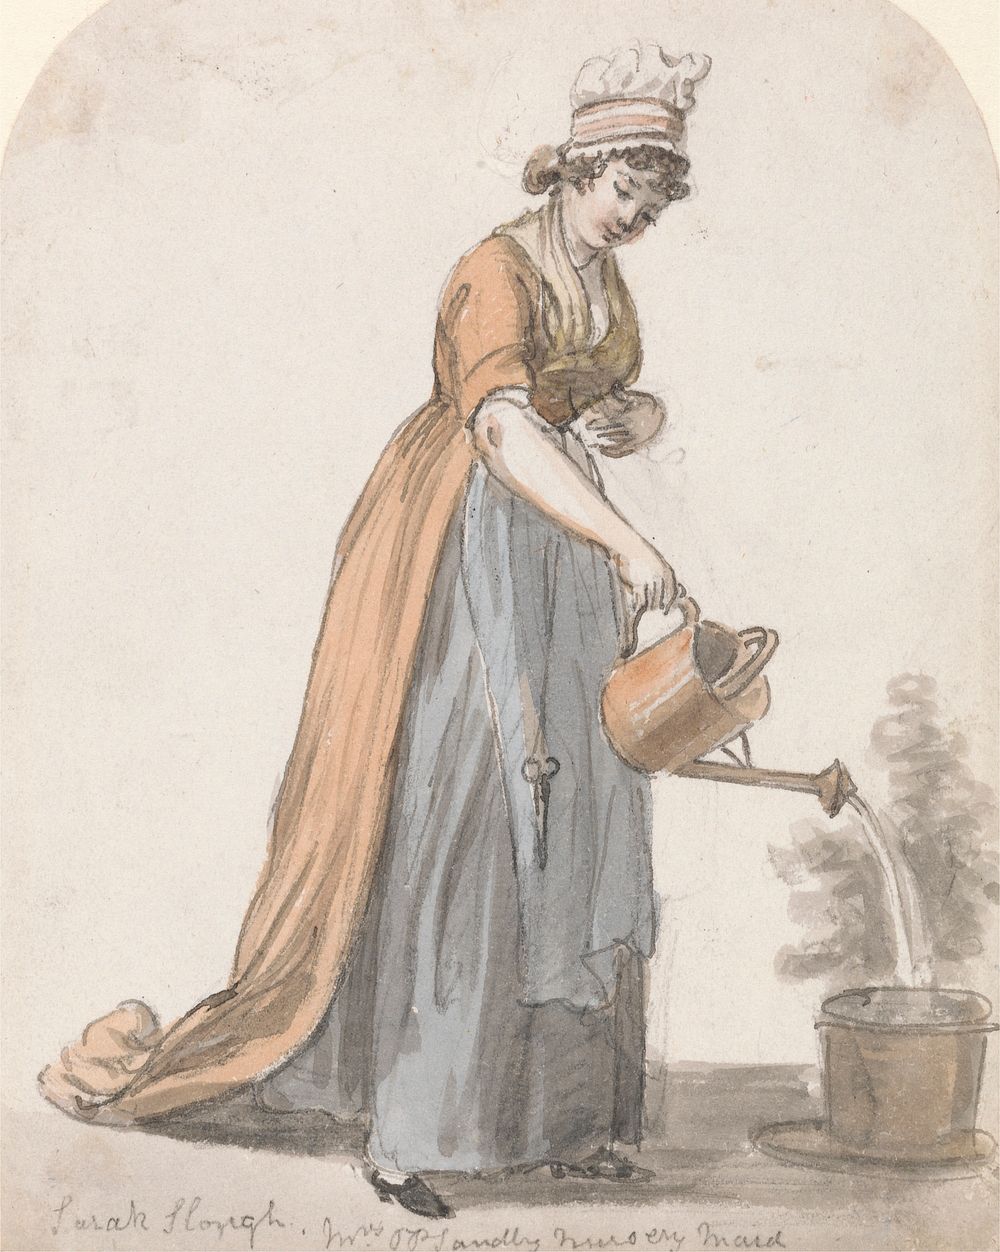 Sara Hough, Mrs. T. P. Sandby's Nursery Maid